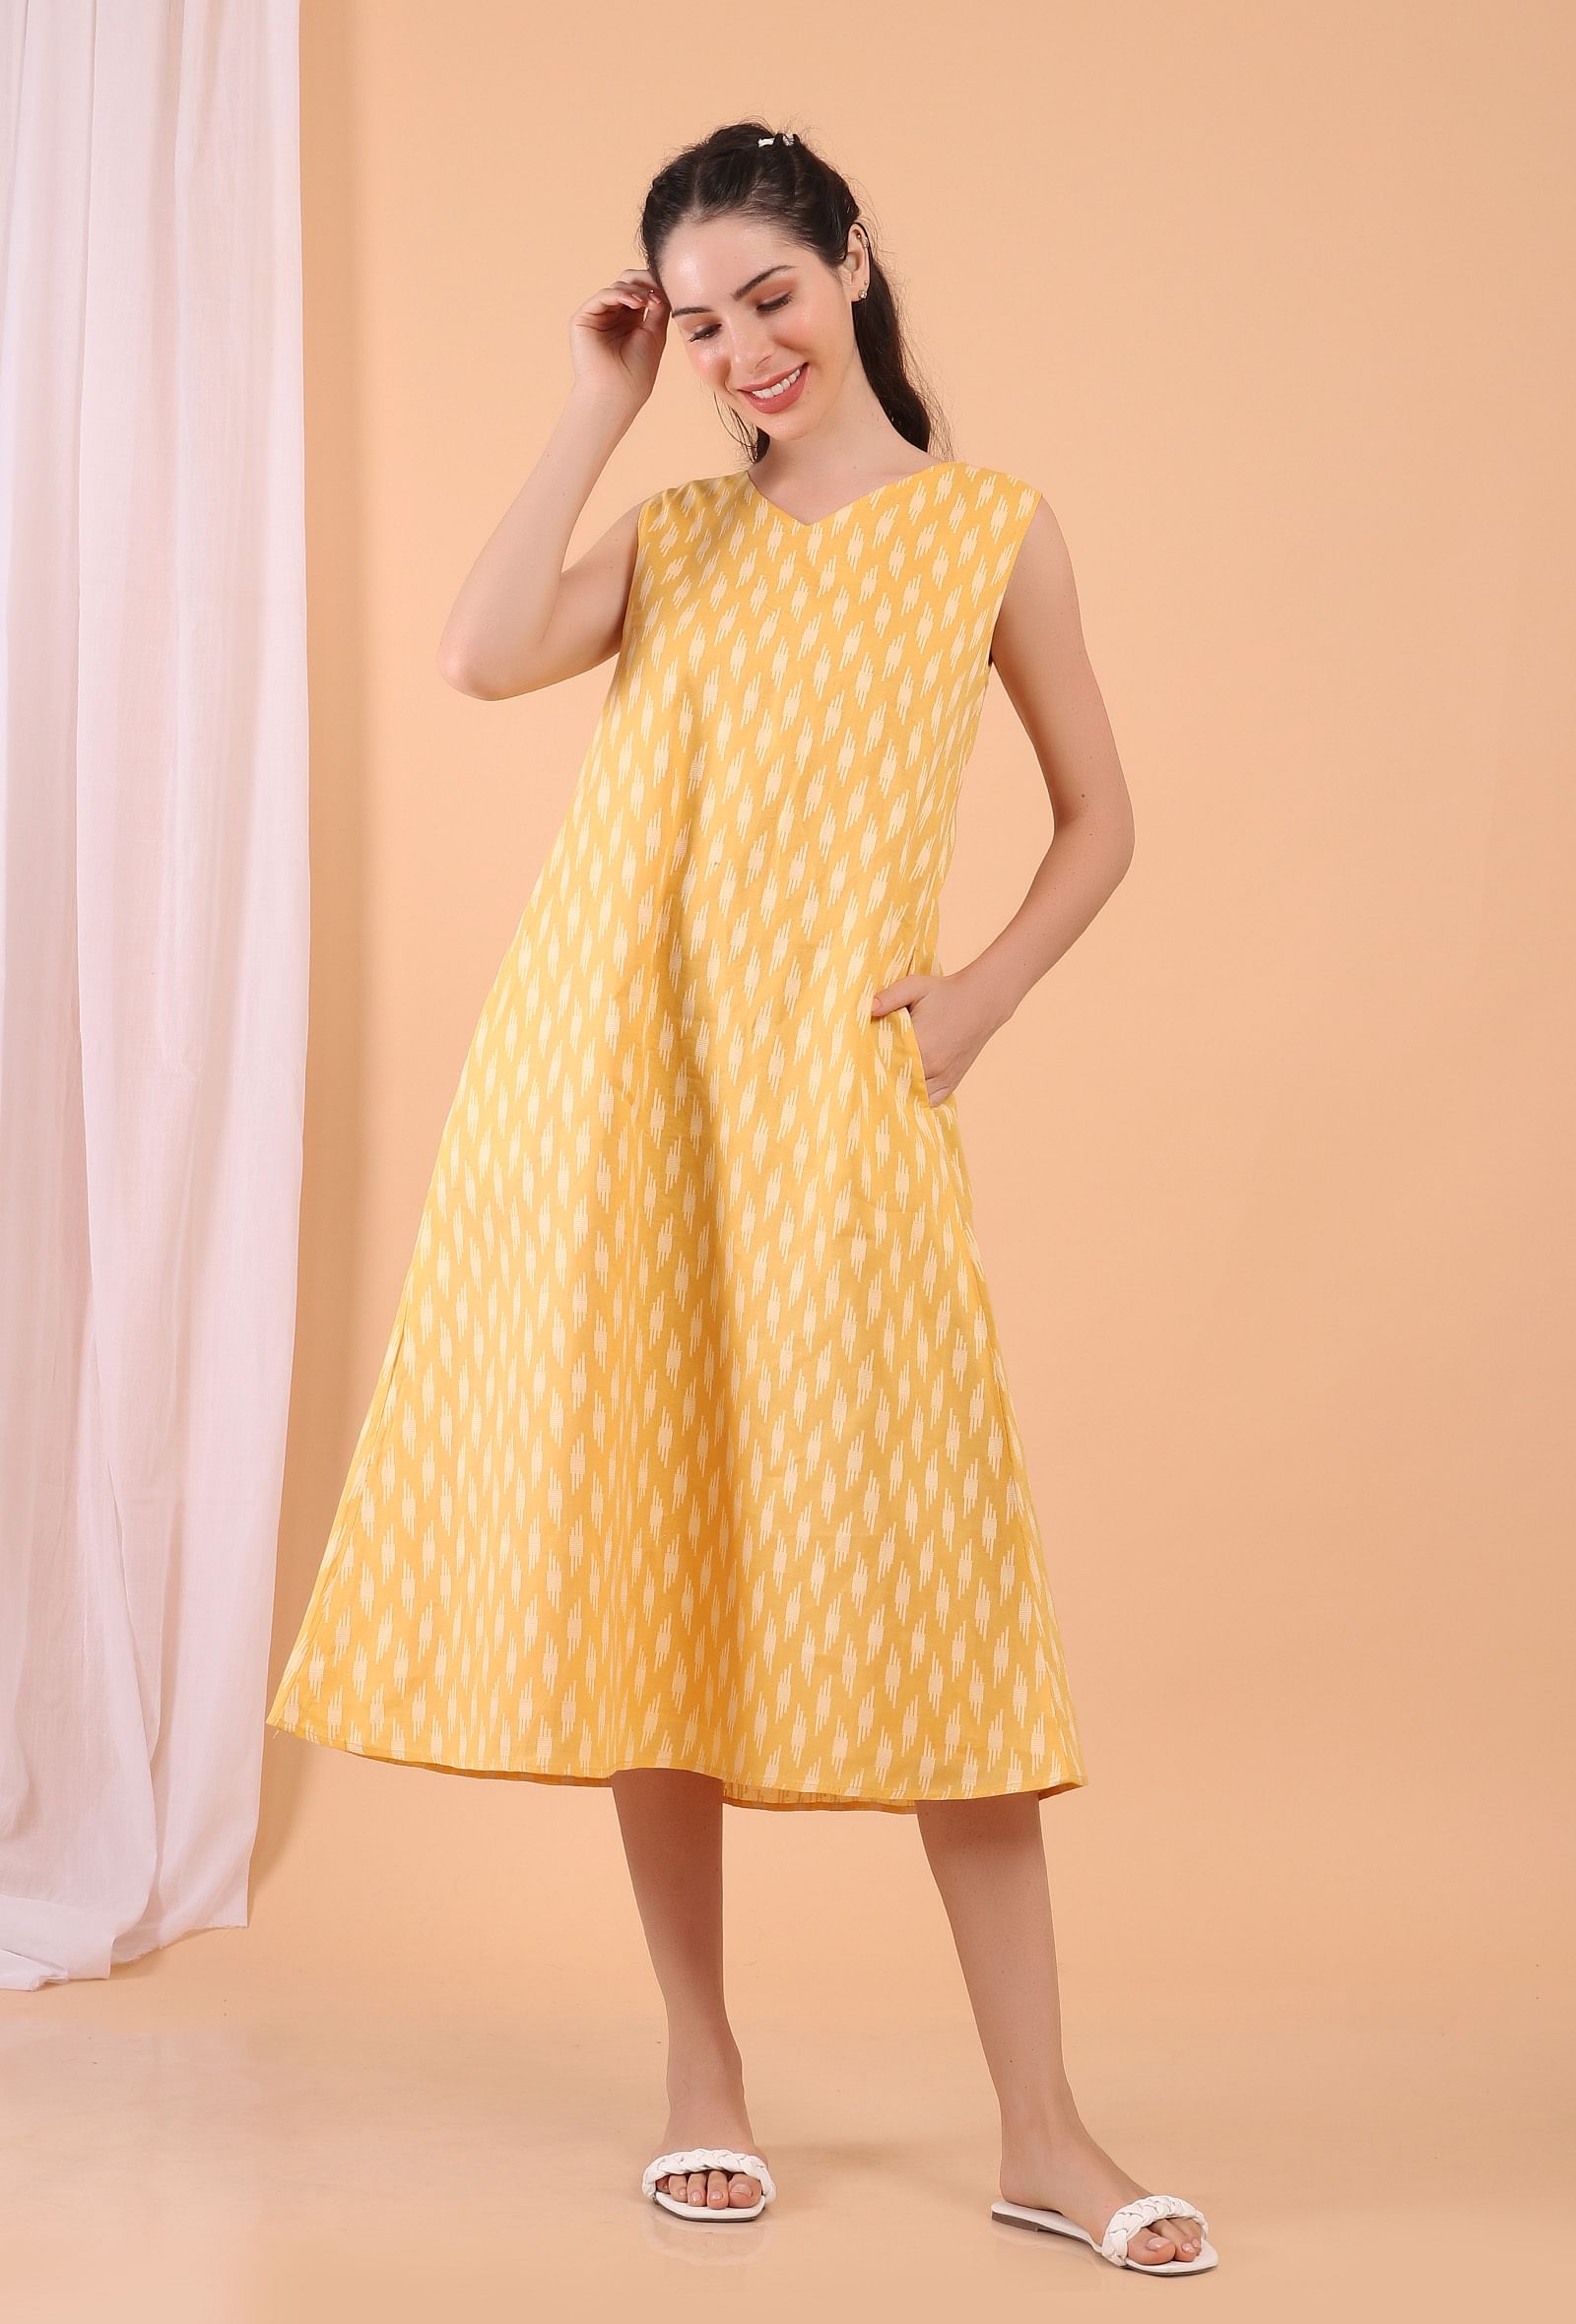 Mustard Yellow Woven Cotton Dress